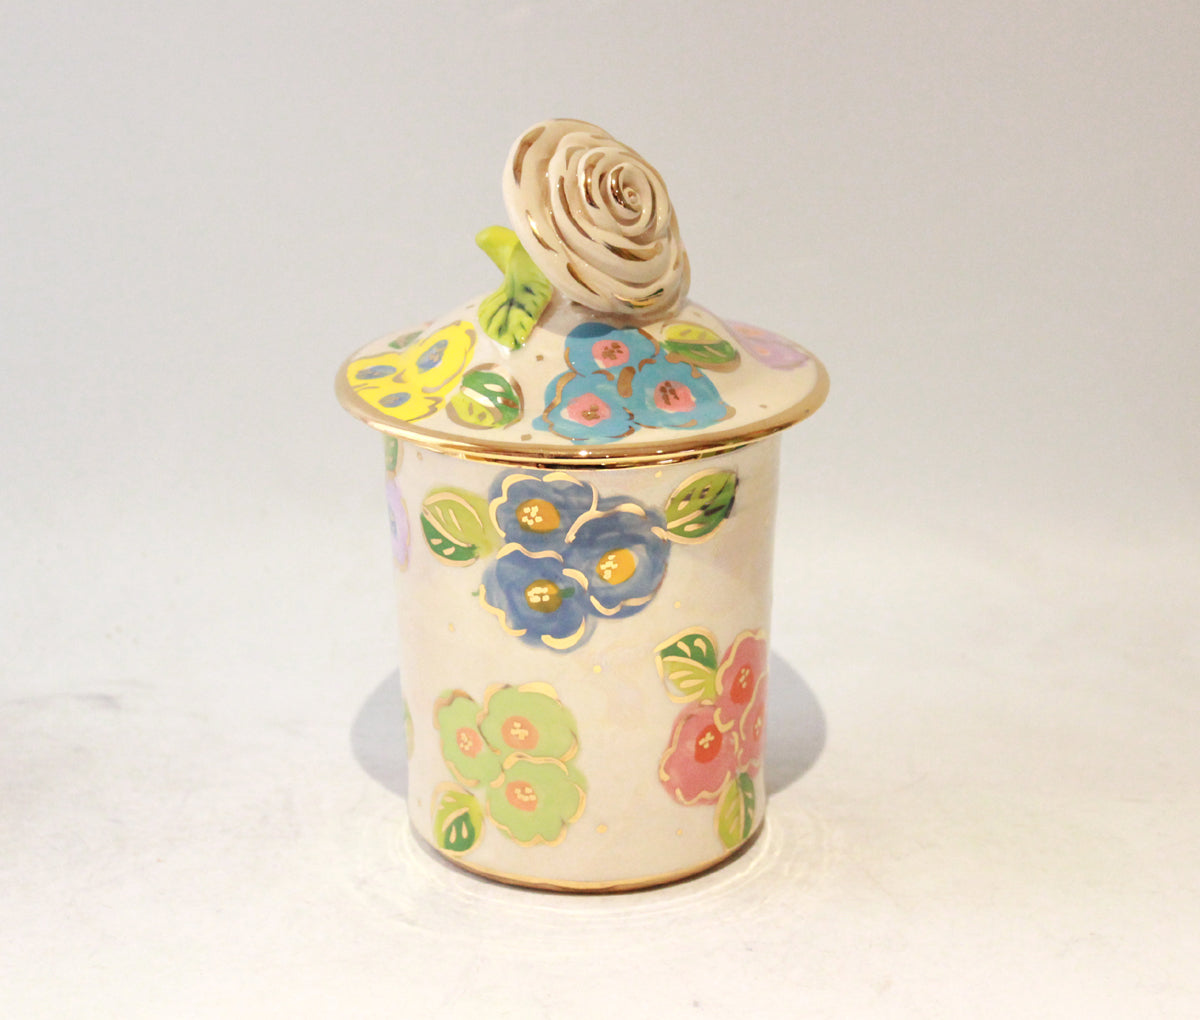 Medium Rose Lidded Tea Caddy in Petit Fleur